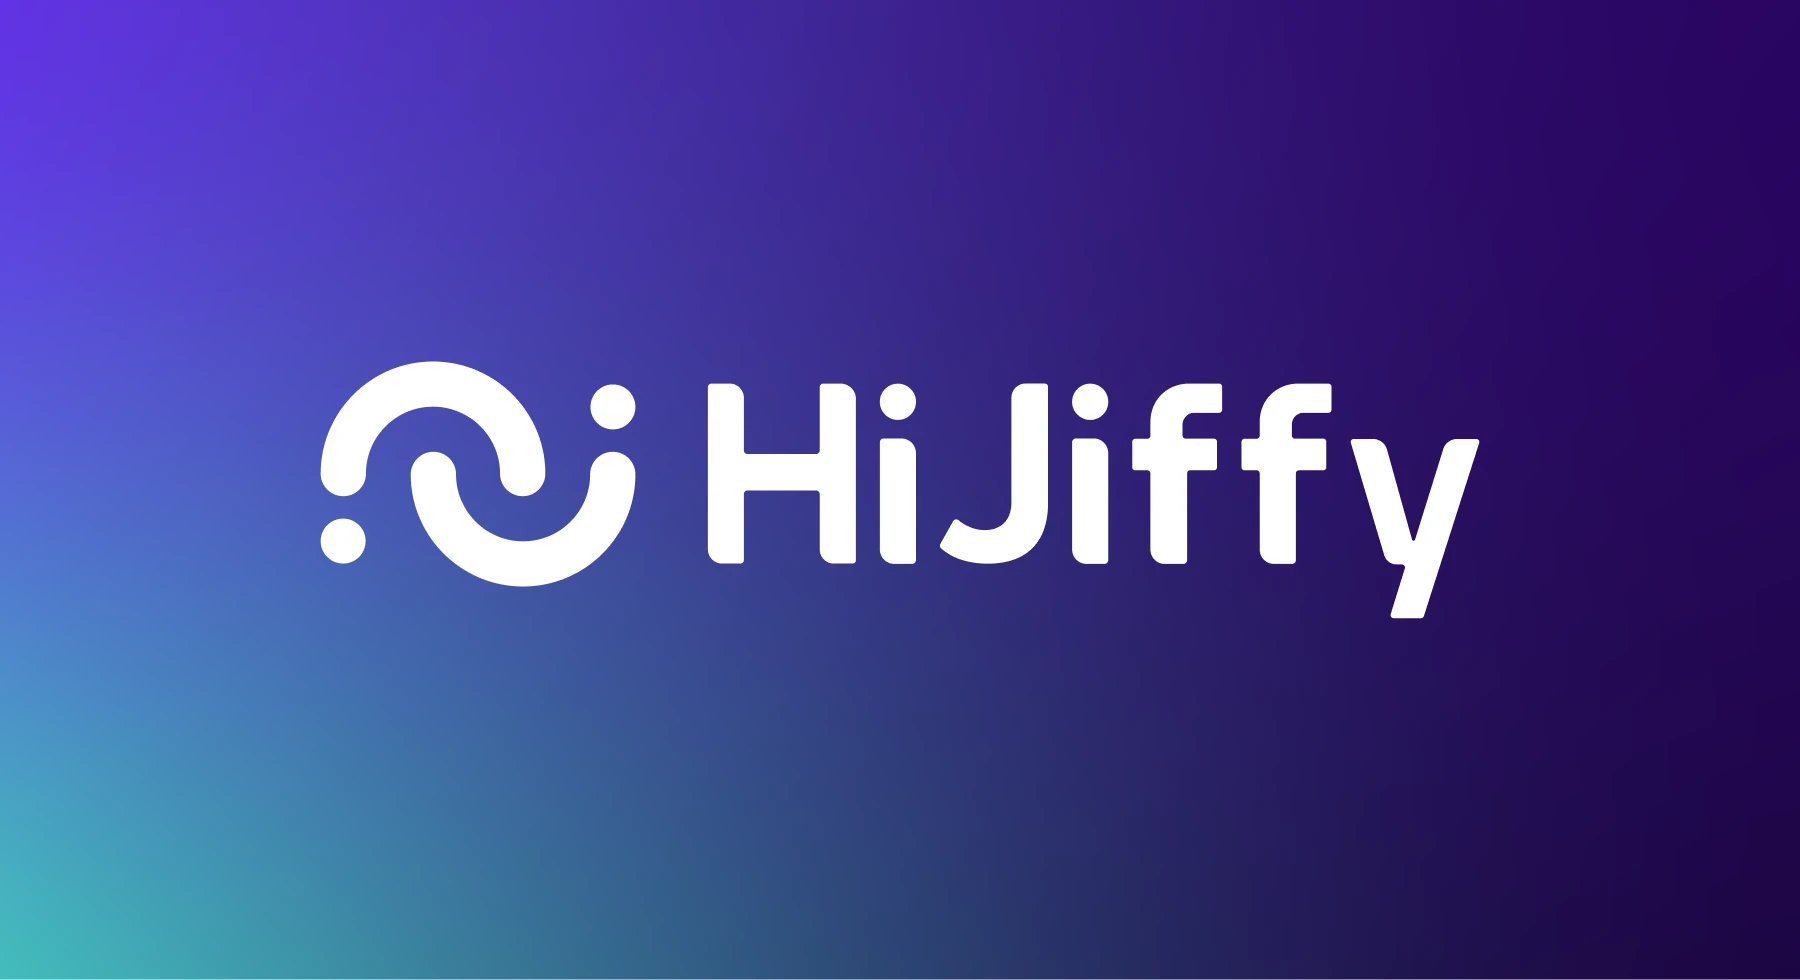 Hijiffy unveils new brand indentity